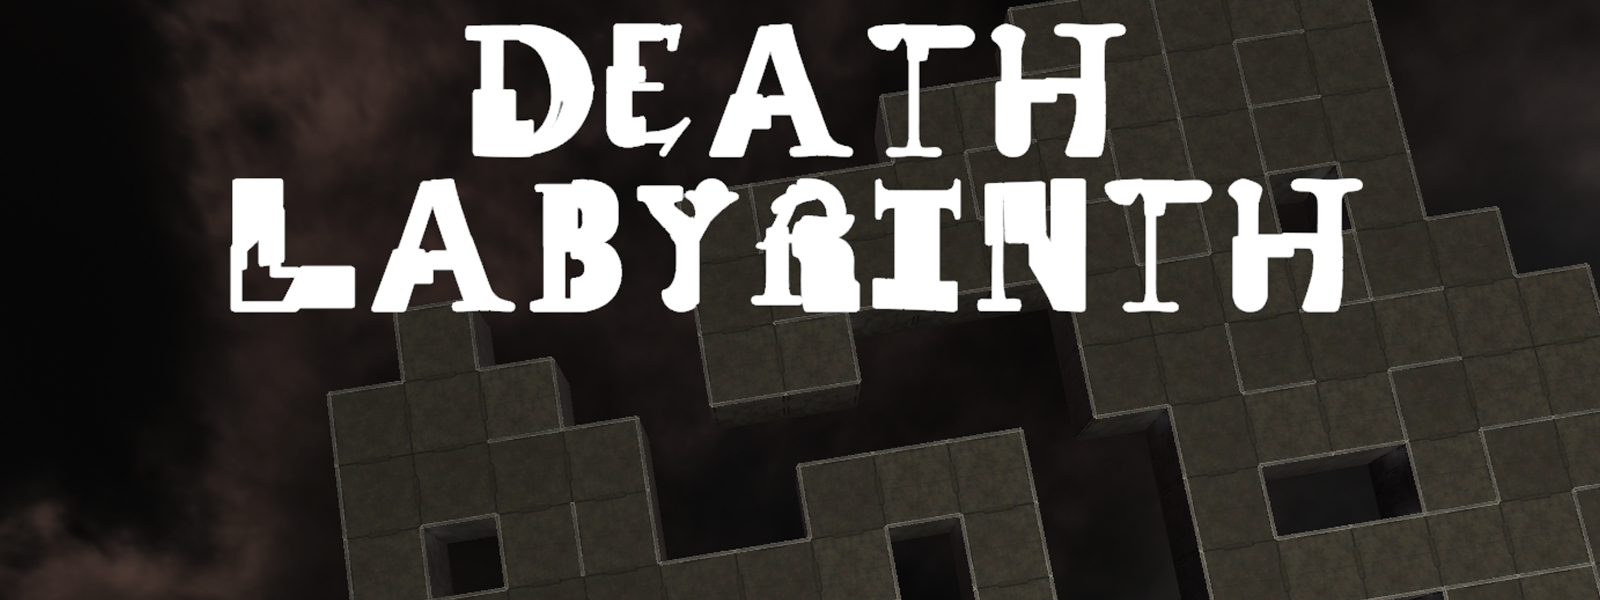 Death Labyrinth